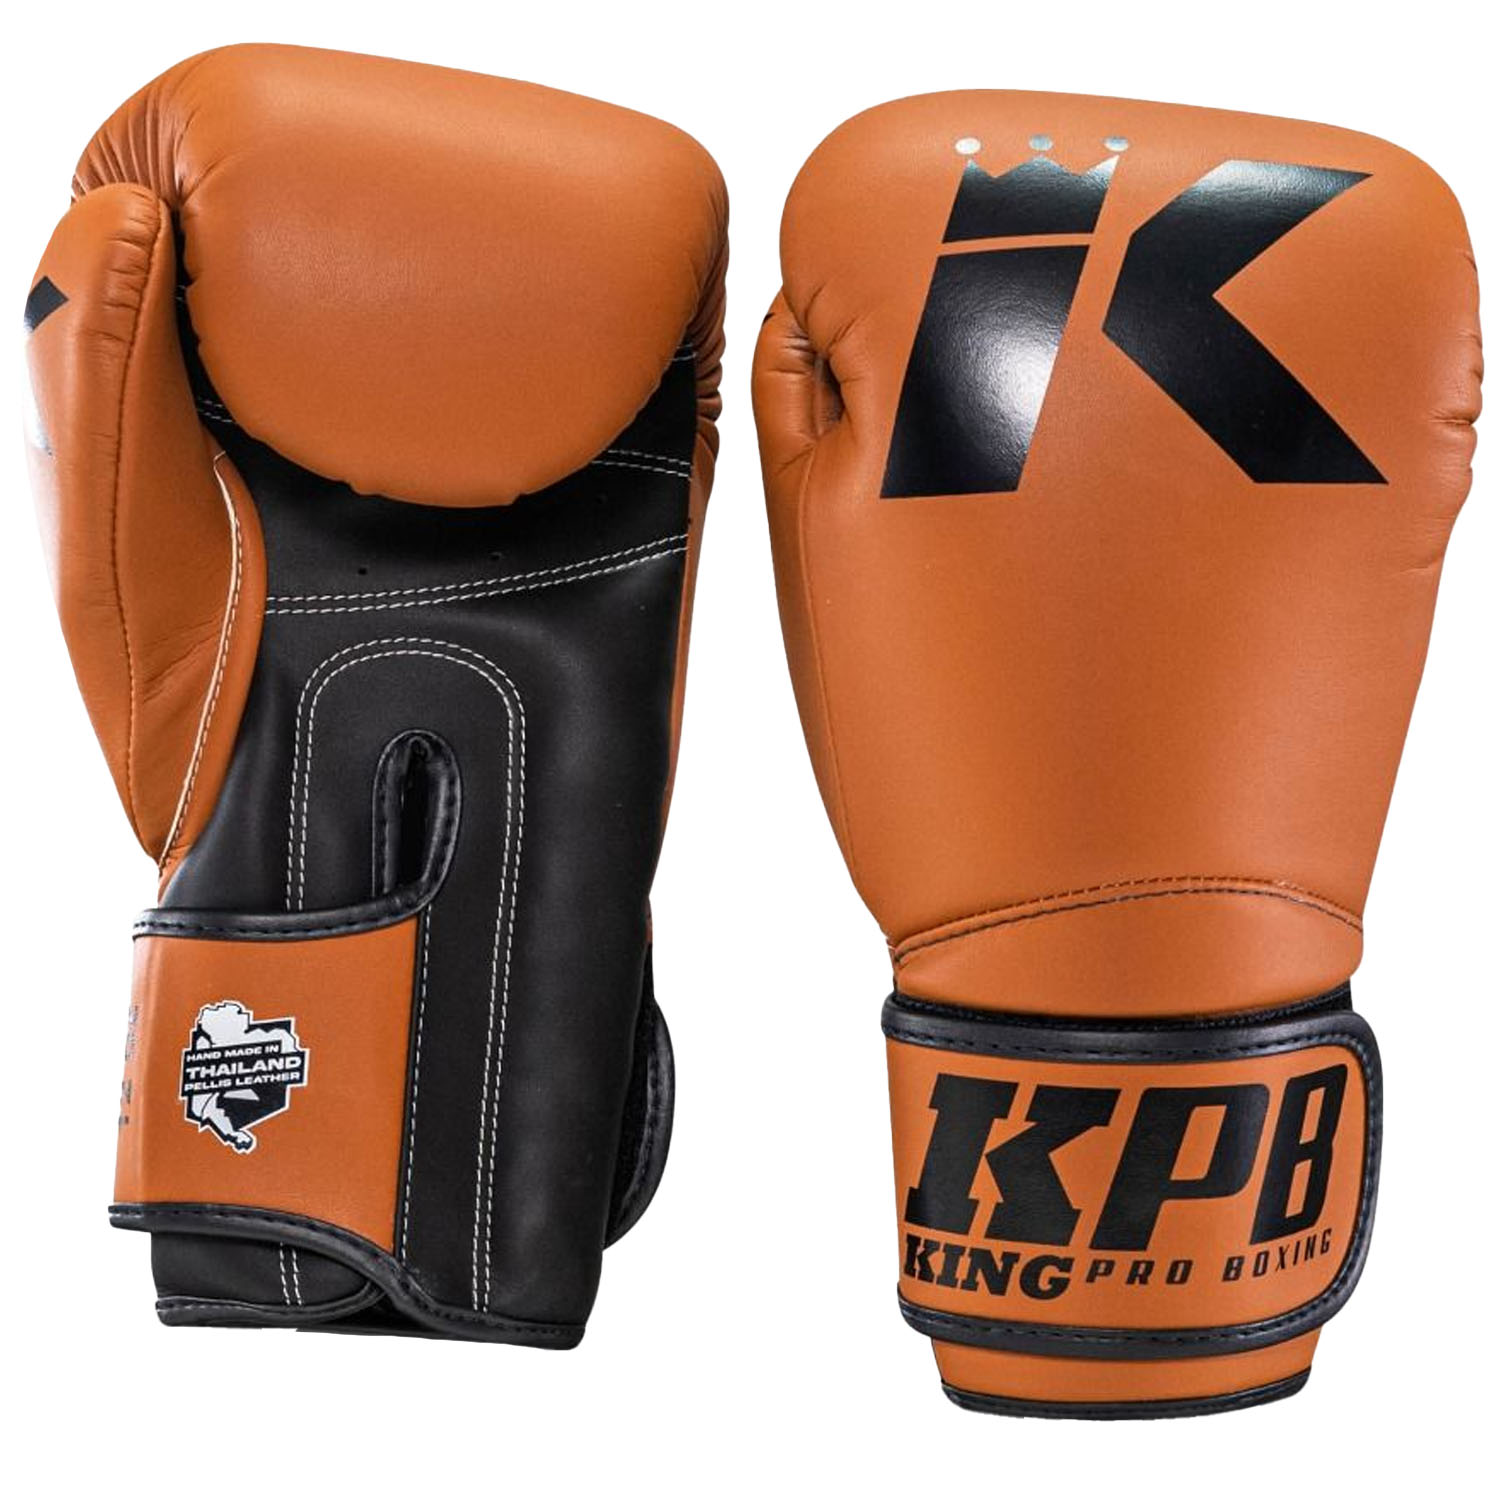 KING PRO BOXING Boxing Gloves, BGK 3, orange, 12 Oz